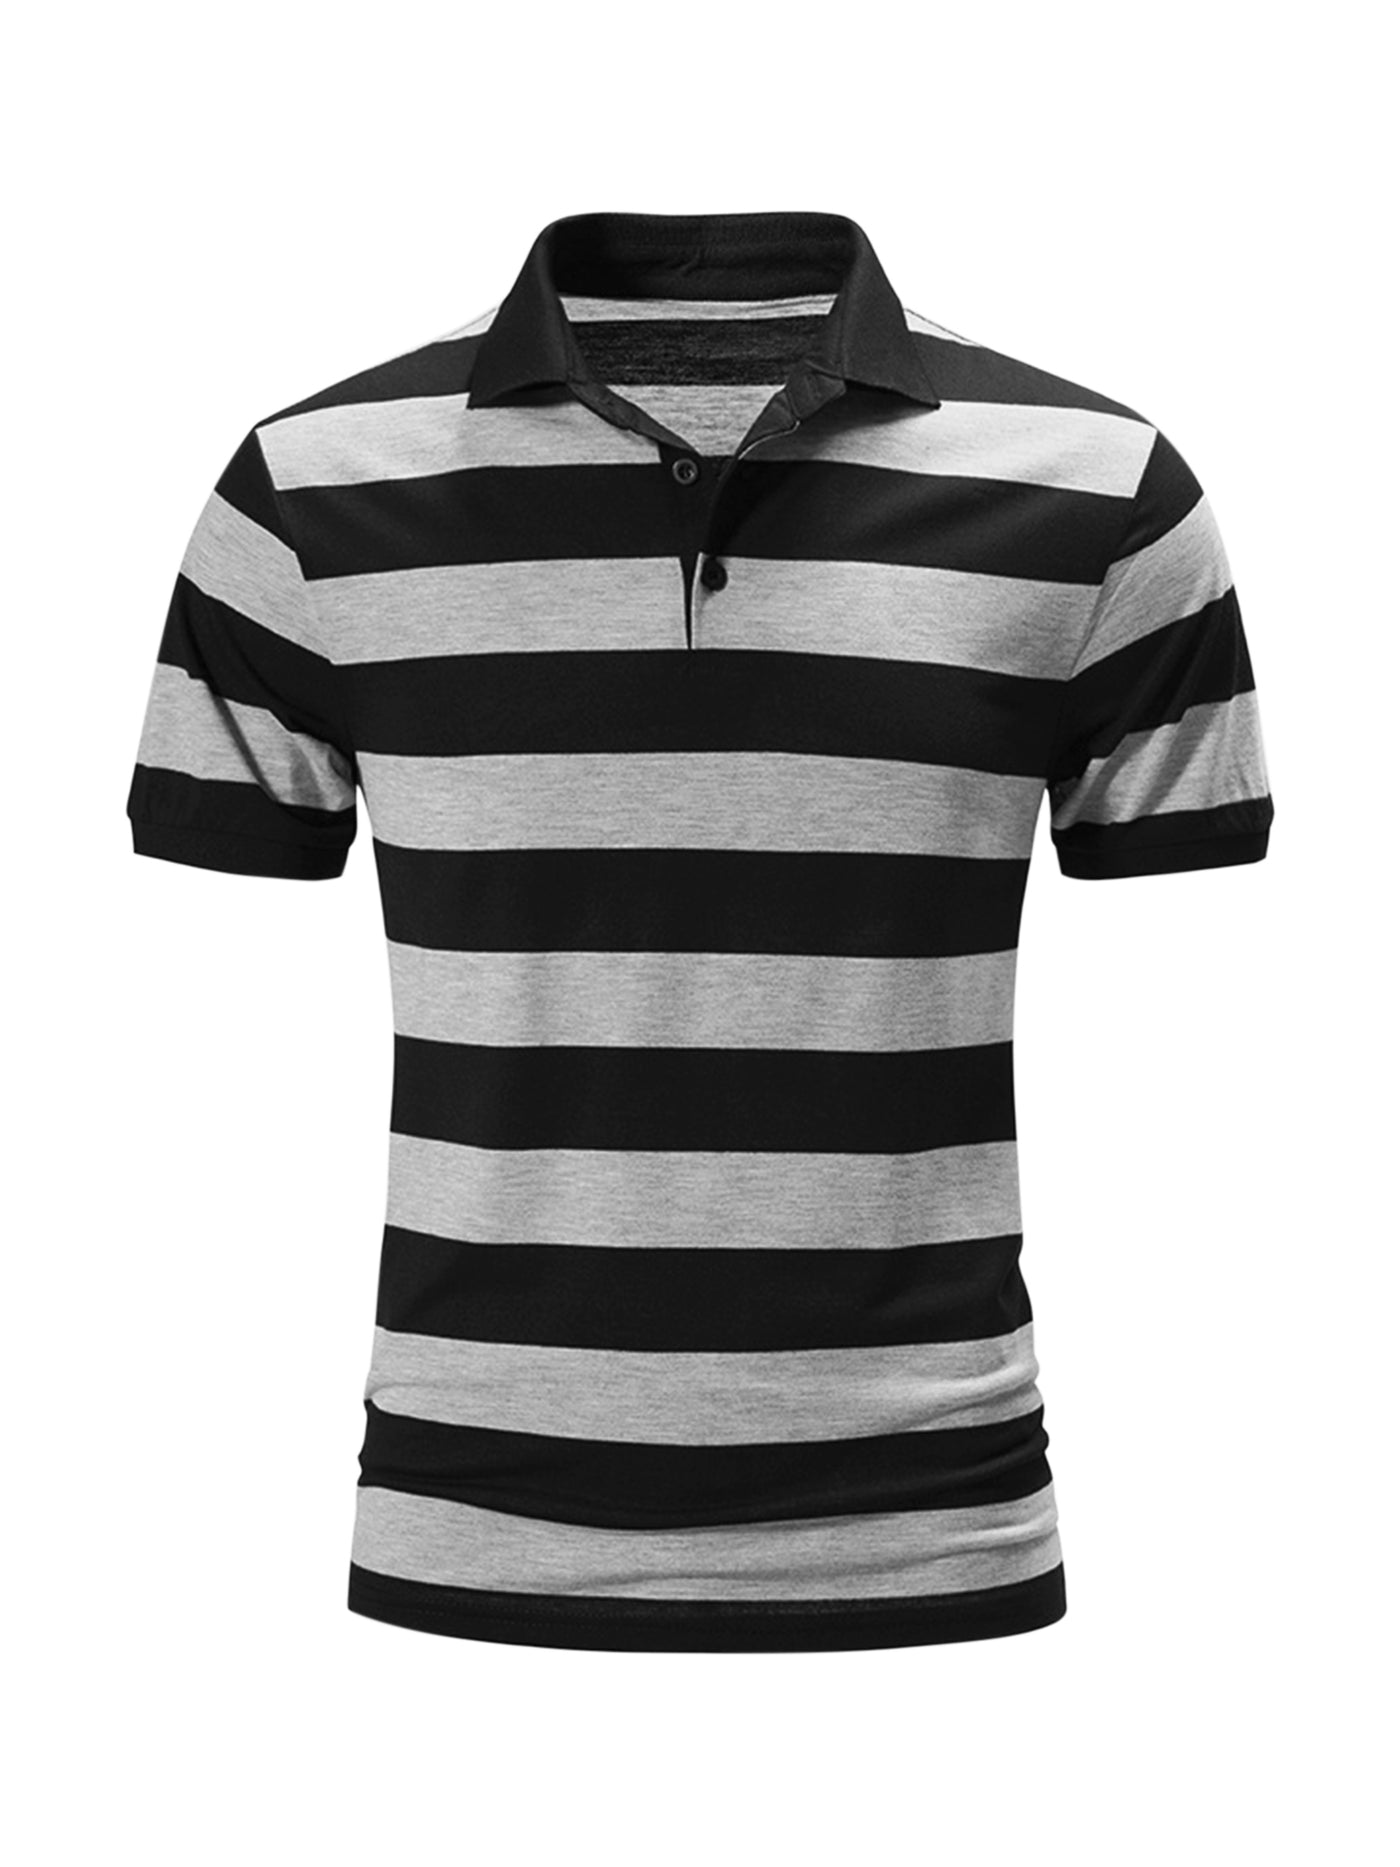 Bublédon Striped Shirts for Men's Point Collar Short Sleeve Casual Golf Polo Shirt